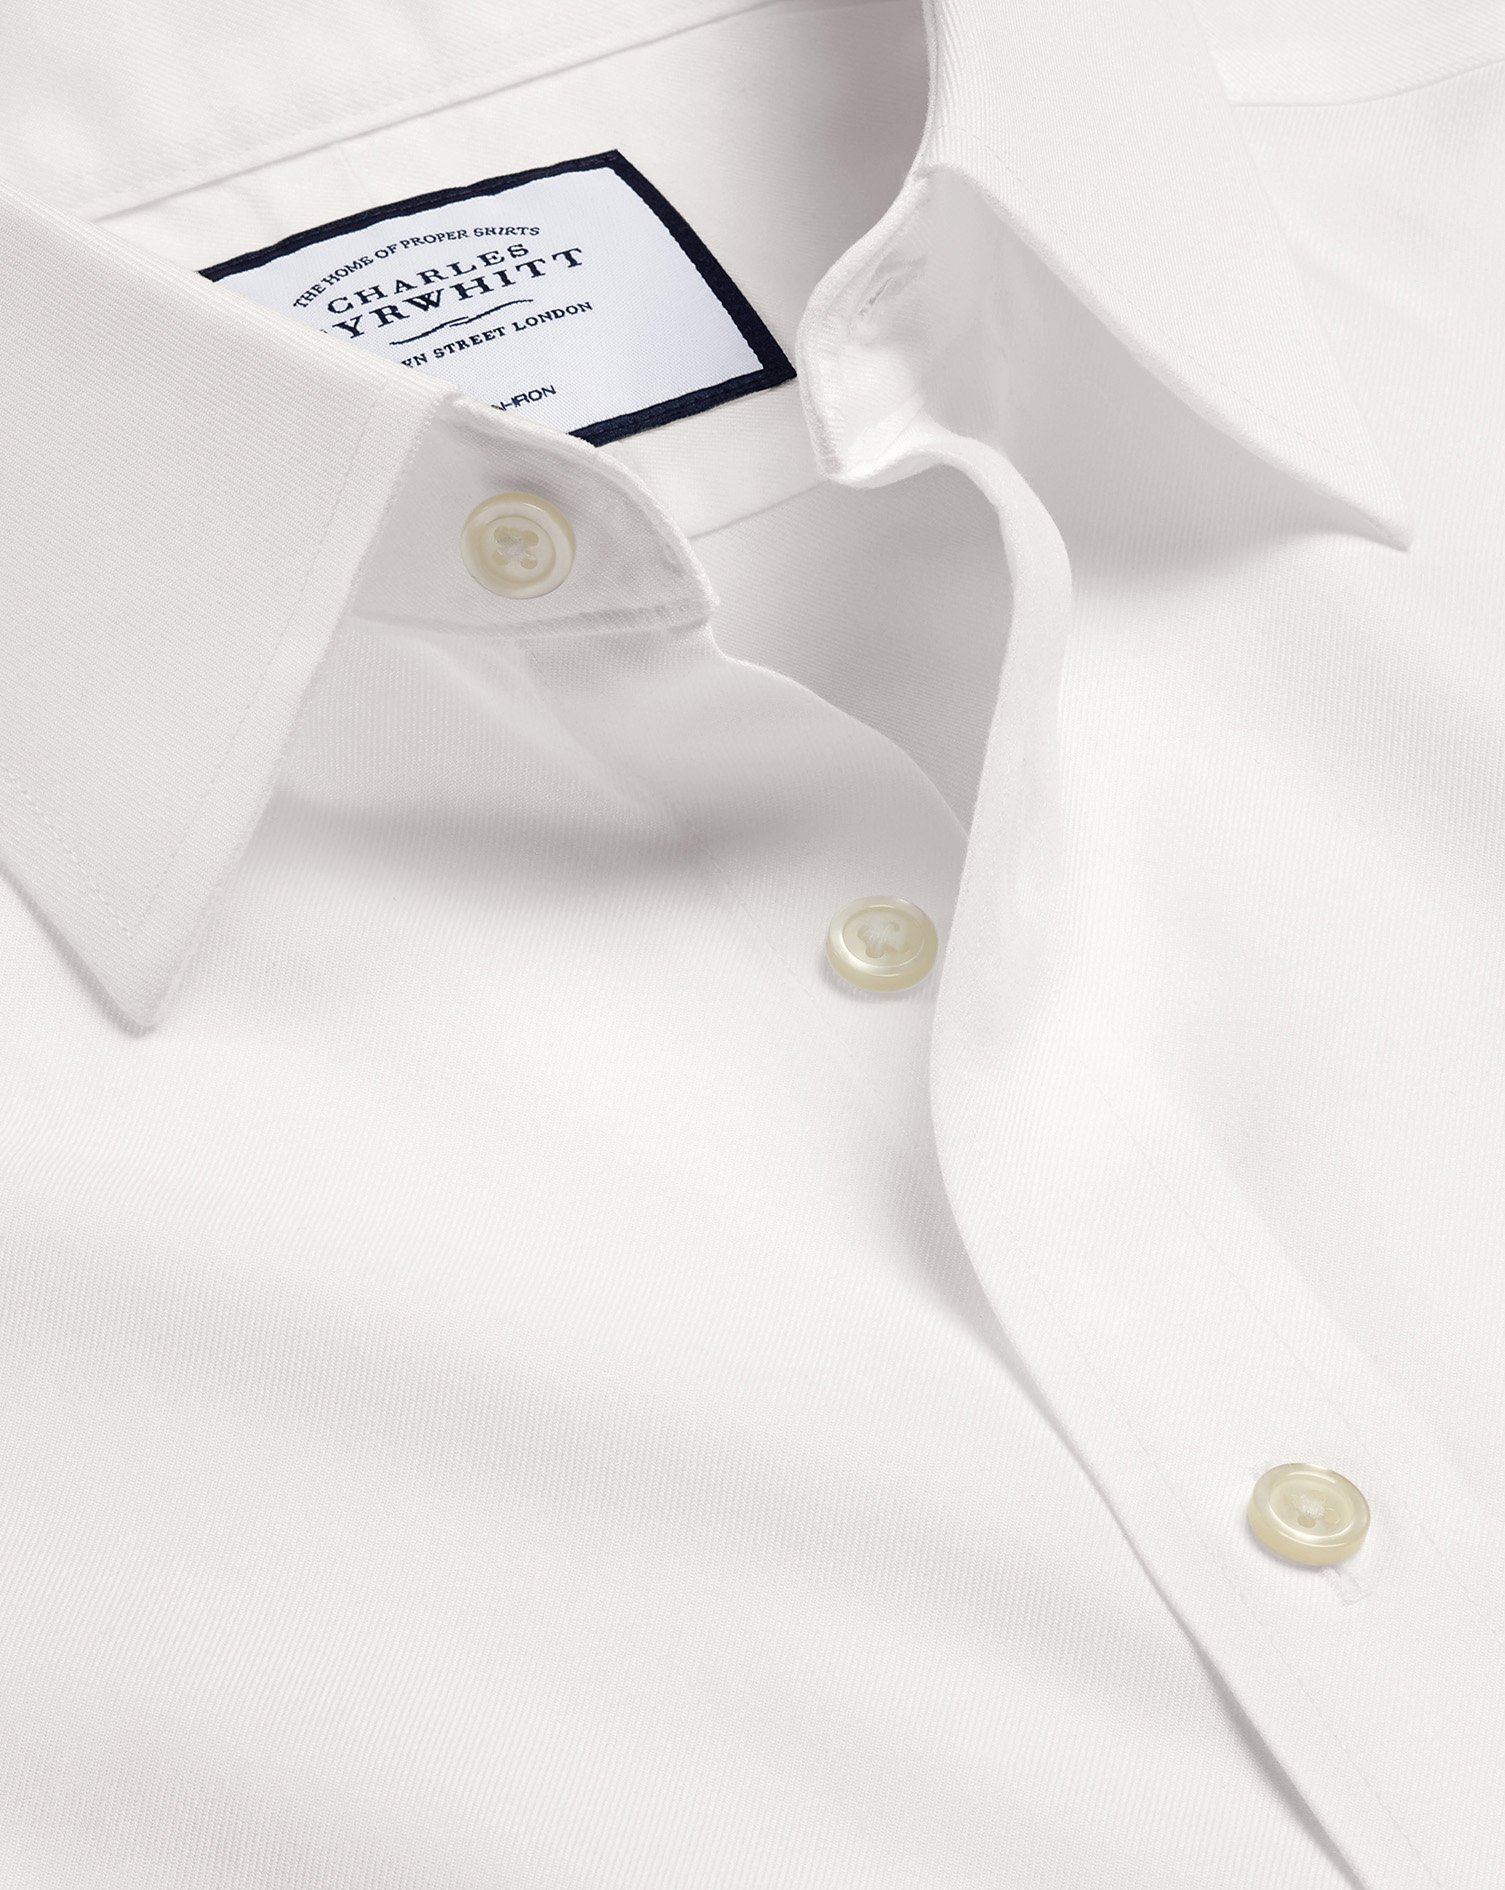 Men's Charles Tyrwhitt Non-Iron Twill Dress Shirt - Ivory White French Cuff Size Medium Cotton
